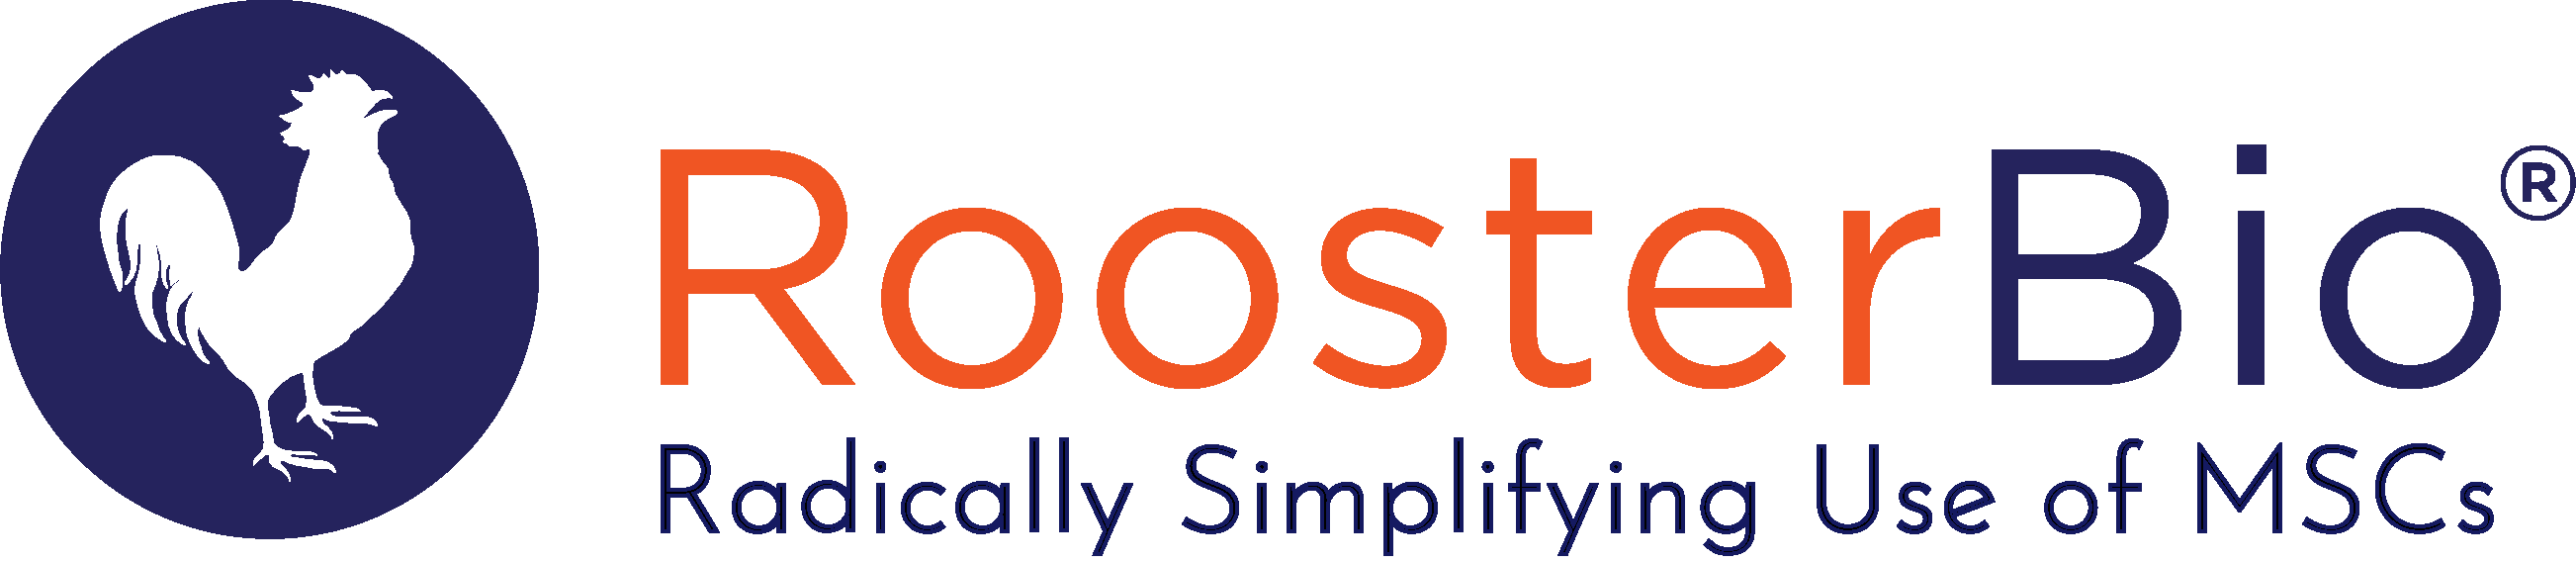 RoosterBio, Inc. Company Logo